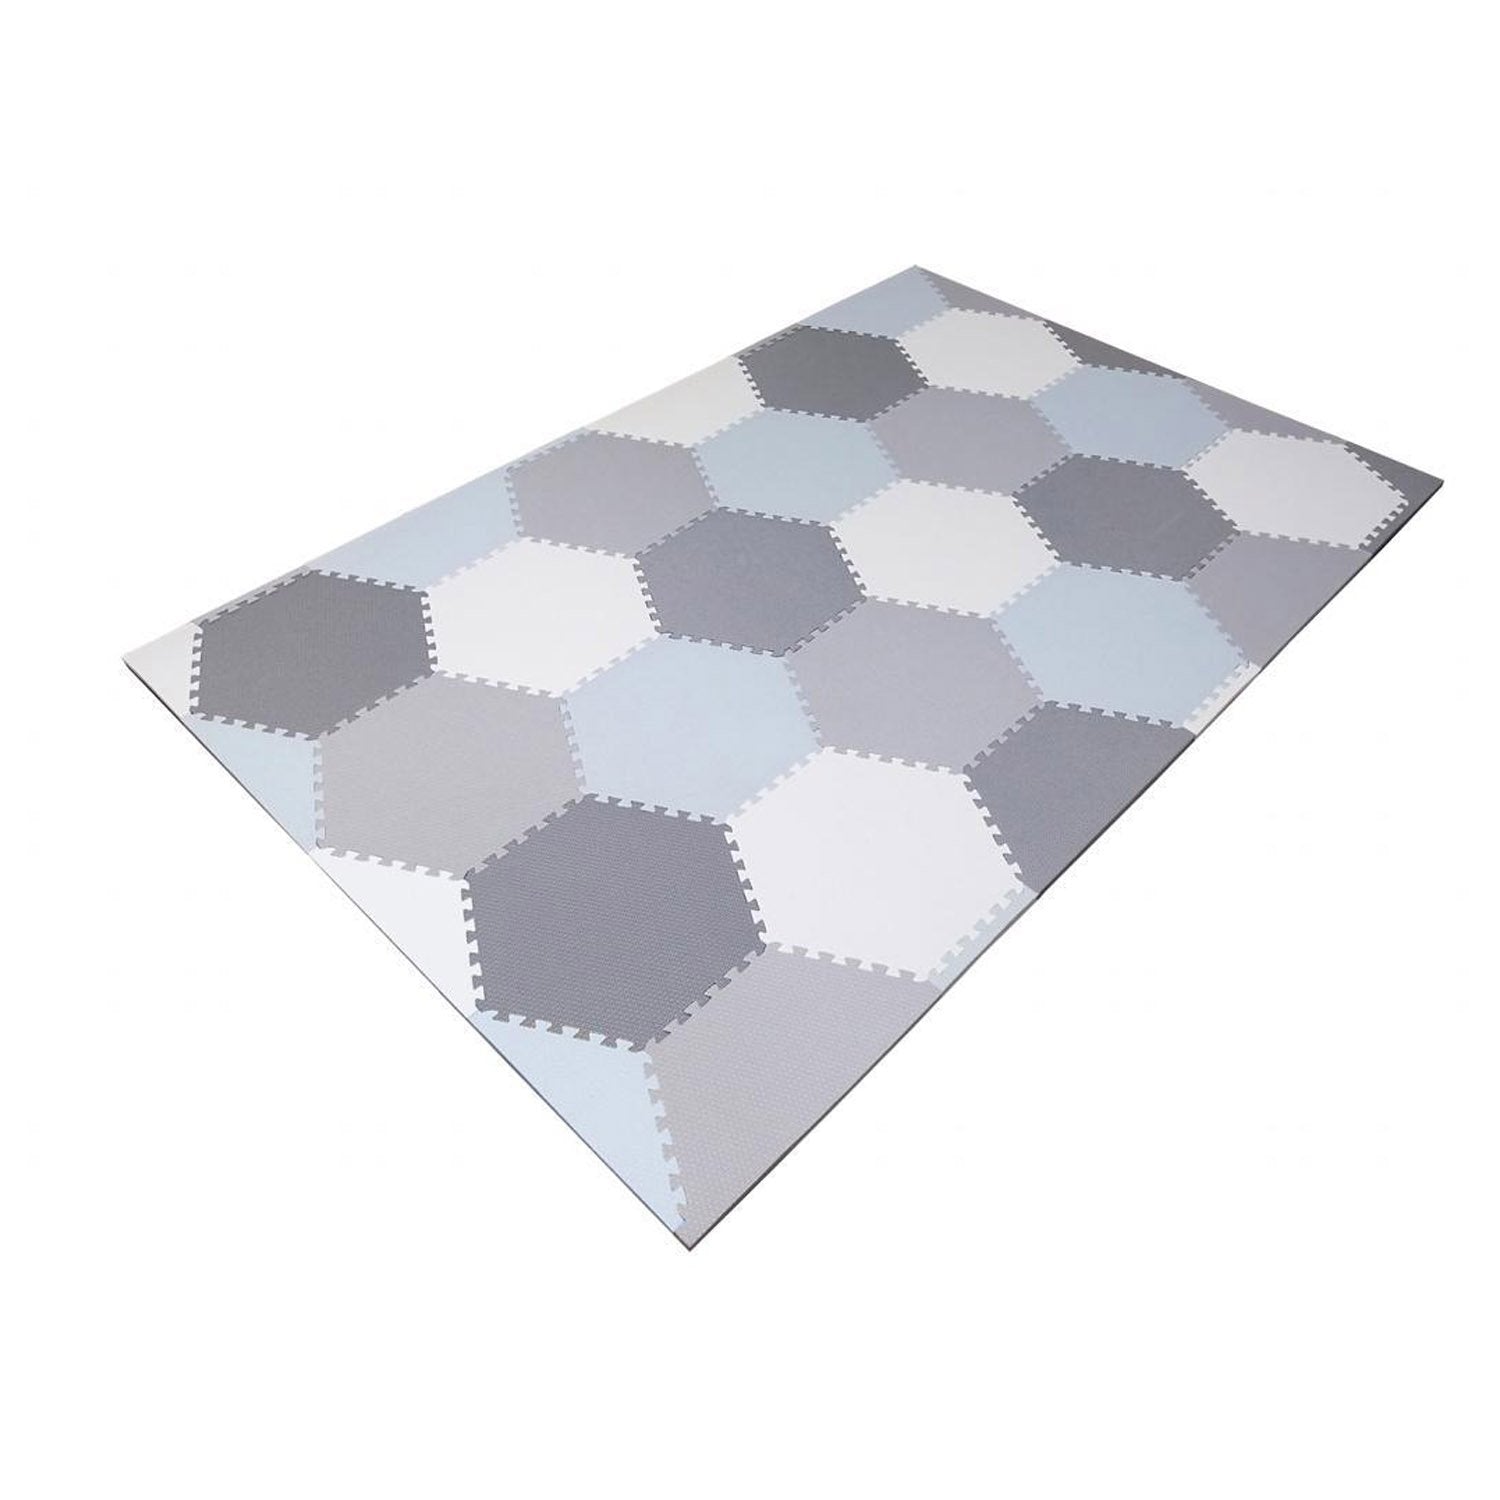 Foam Tiles Interlocking Puzzle Foam Floor Mats Baby Play Mat For